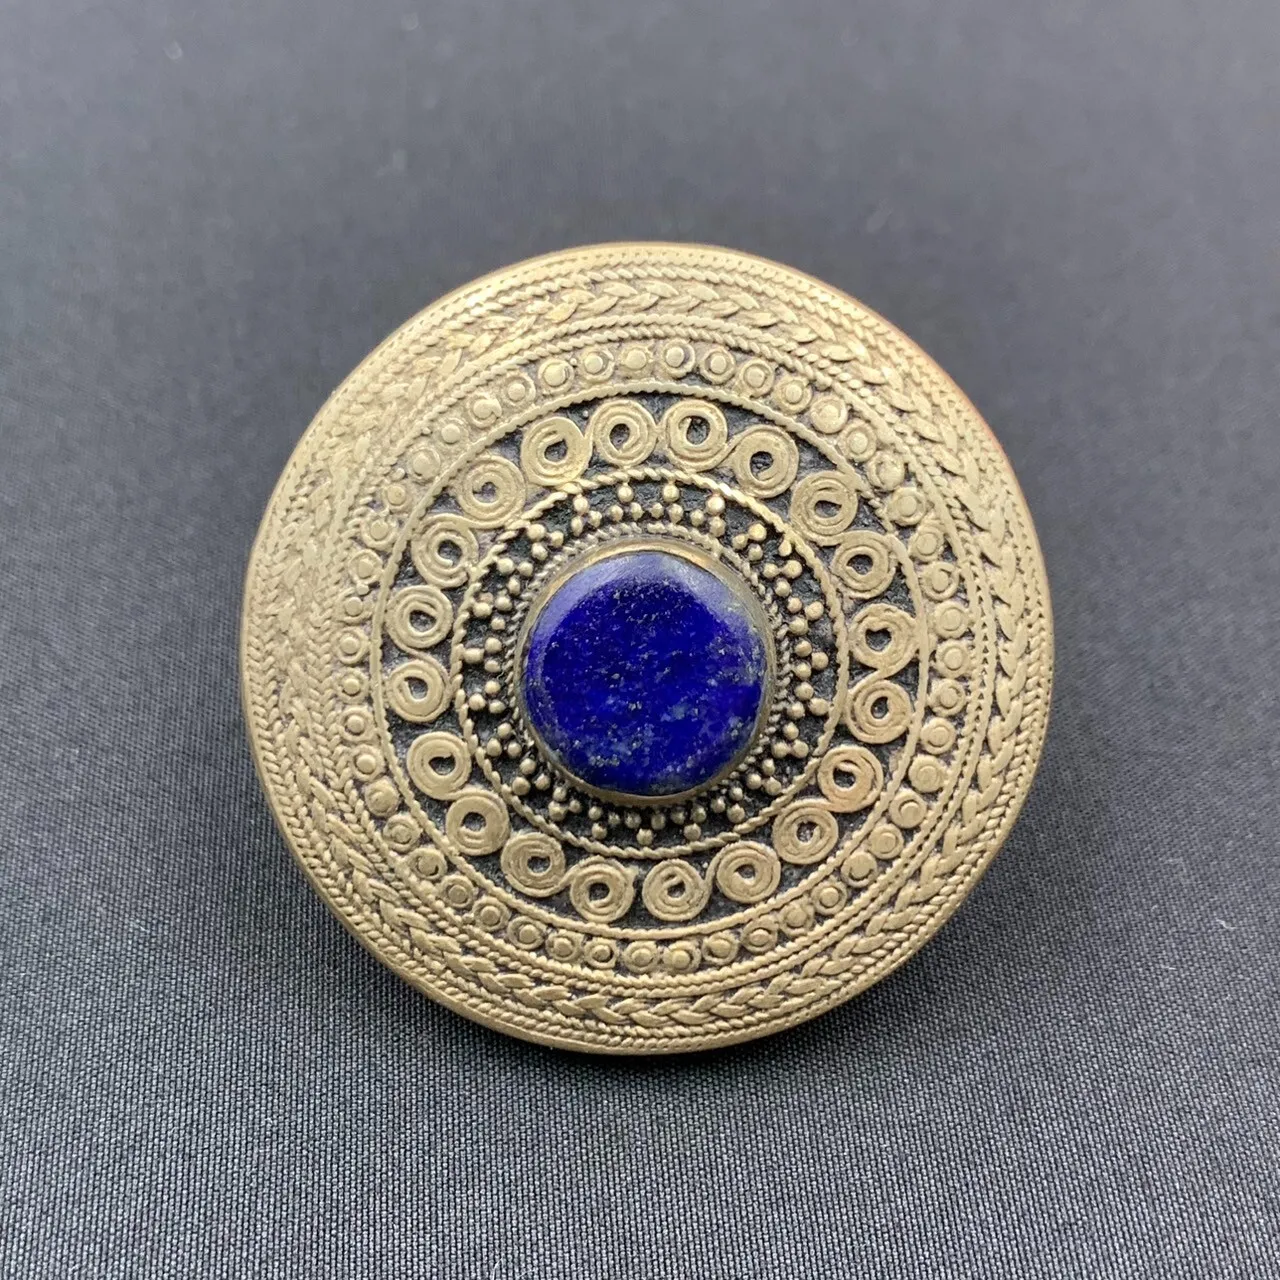 Stunning Vintage Handmade Old Natural Lapis Lazuli with Brass Ring. OJ-854 - Image 6 of 6